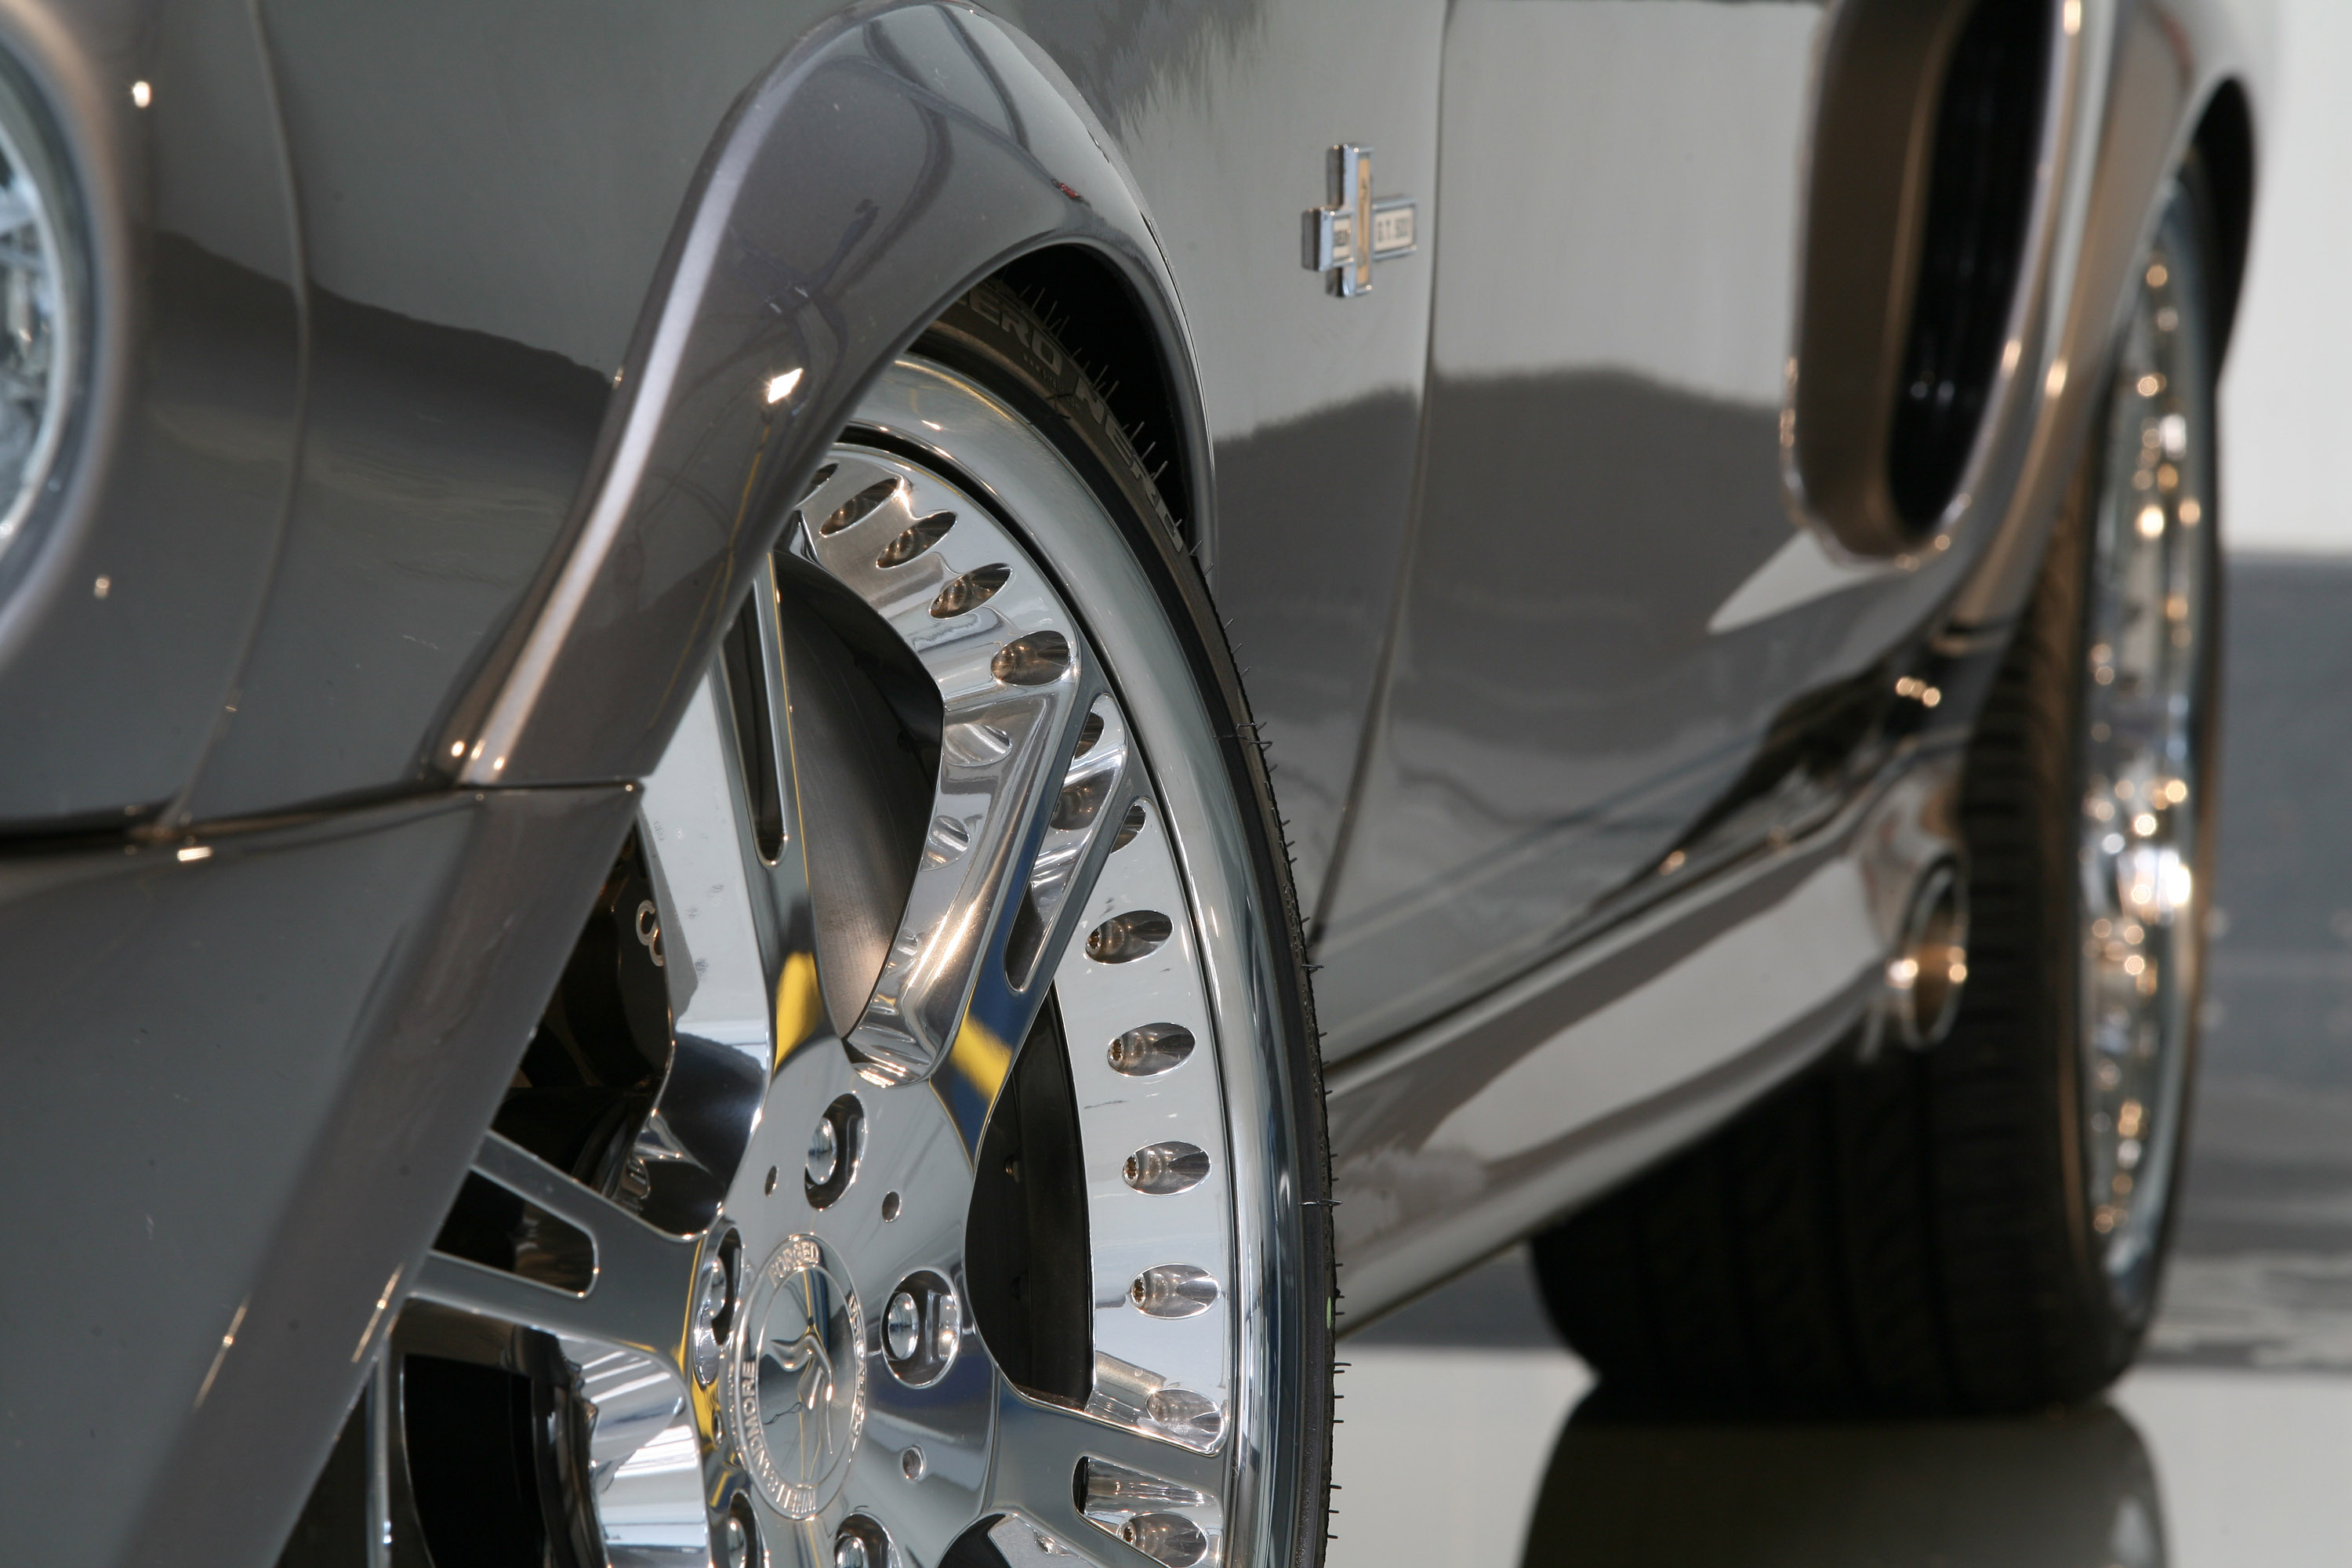 Wheelsandmore Mustang Shelby GT500 - ELEANOR